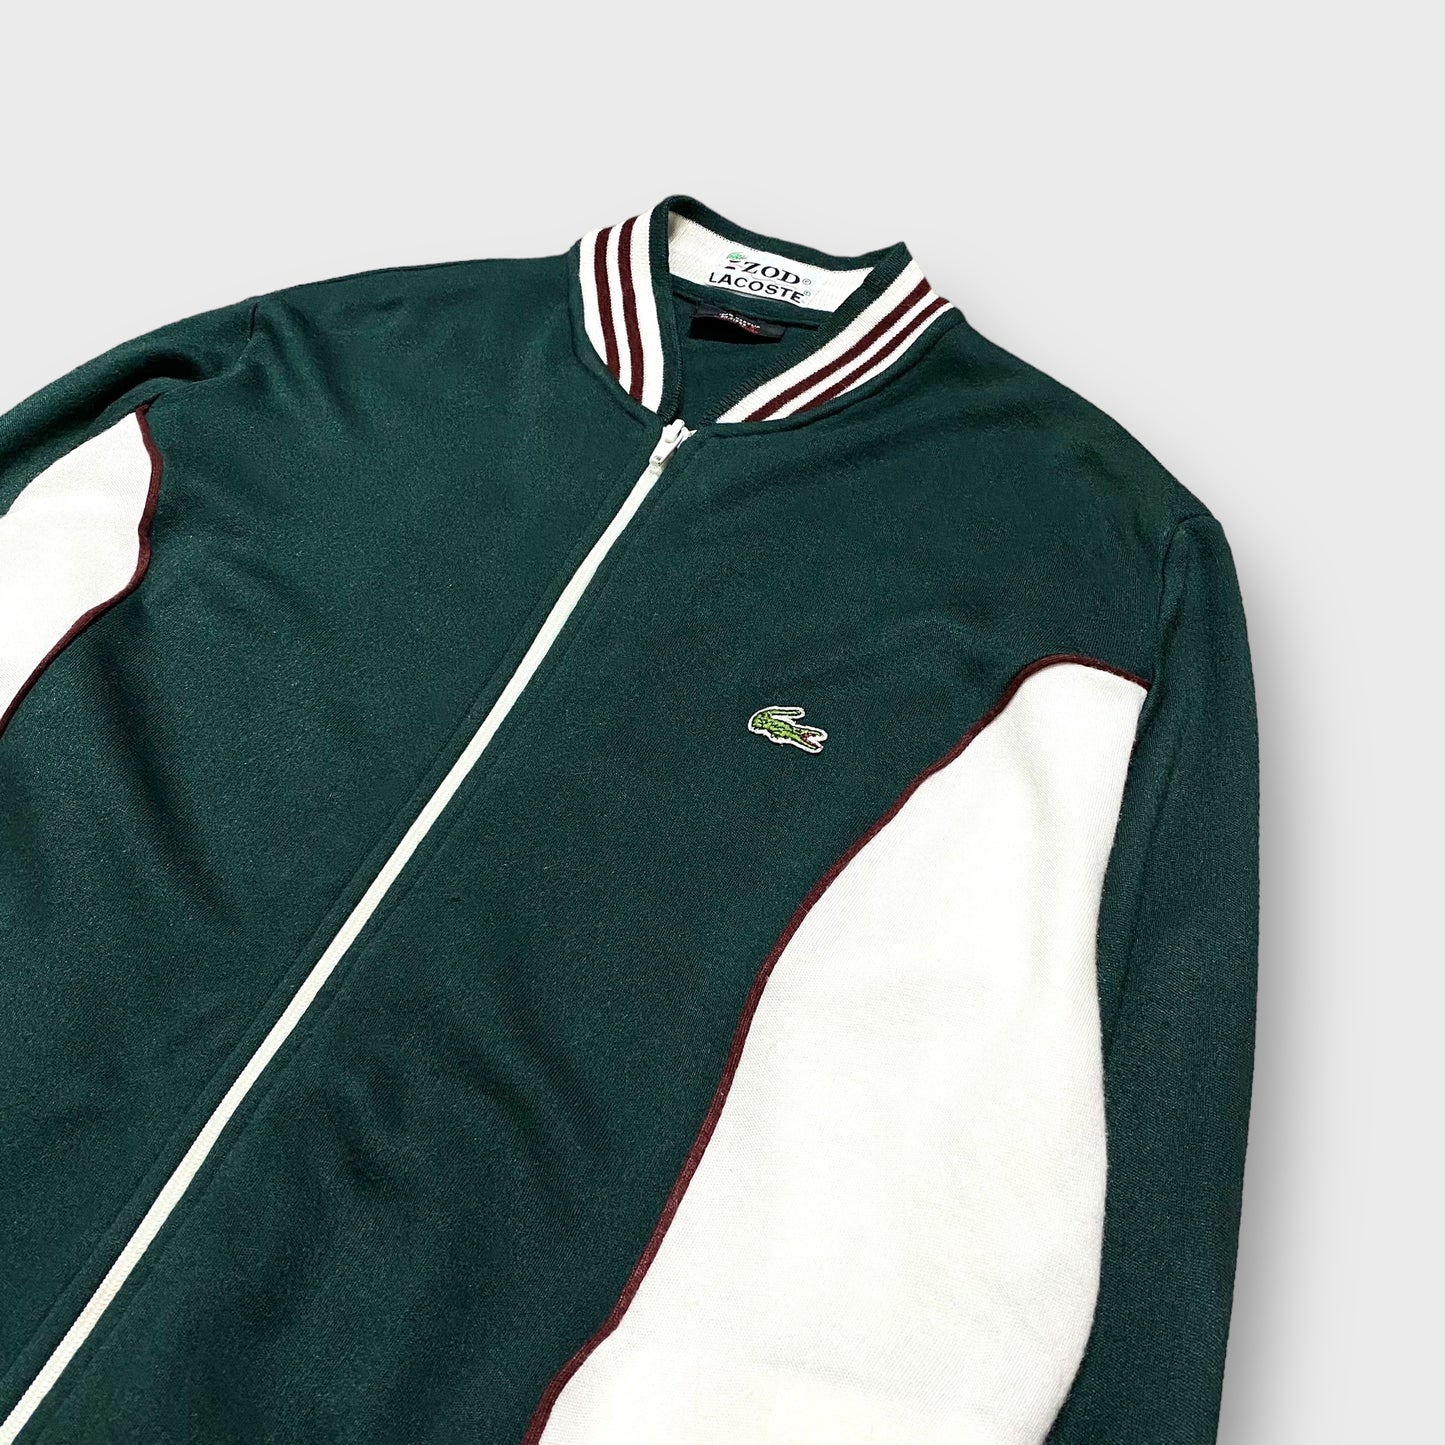 70-80's "IZOD LACOSTE" Cotton track jacket